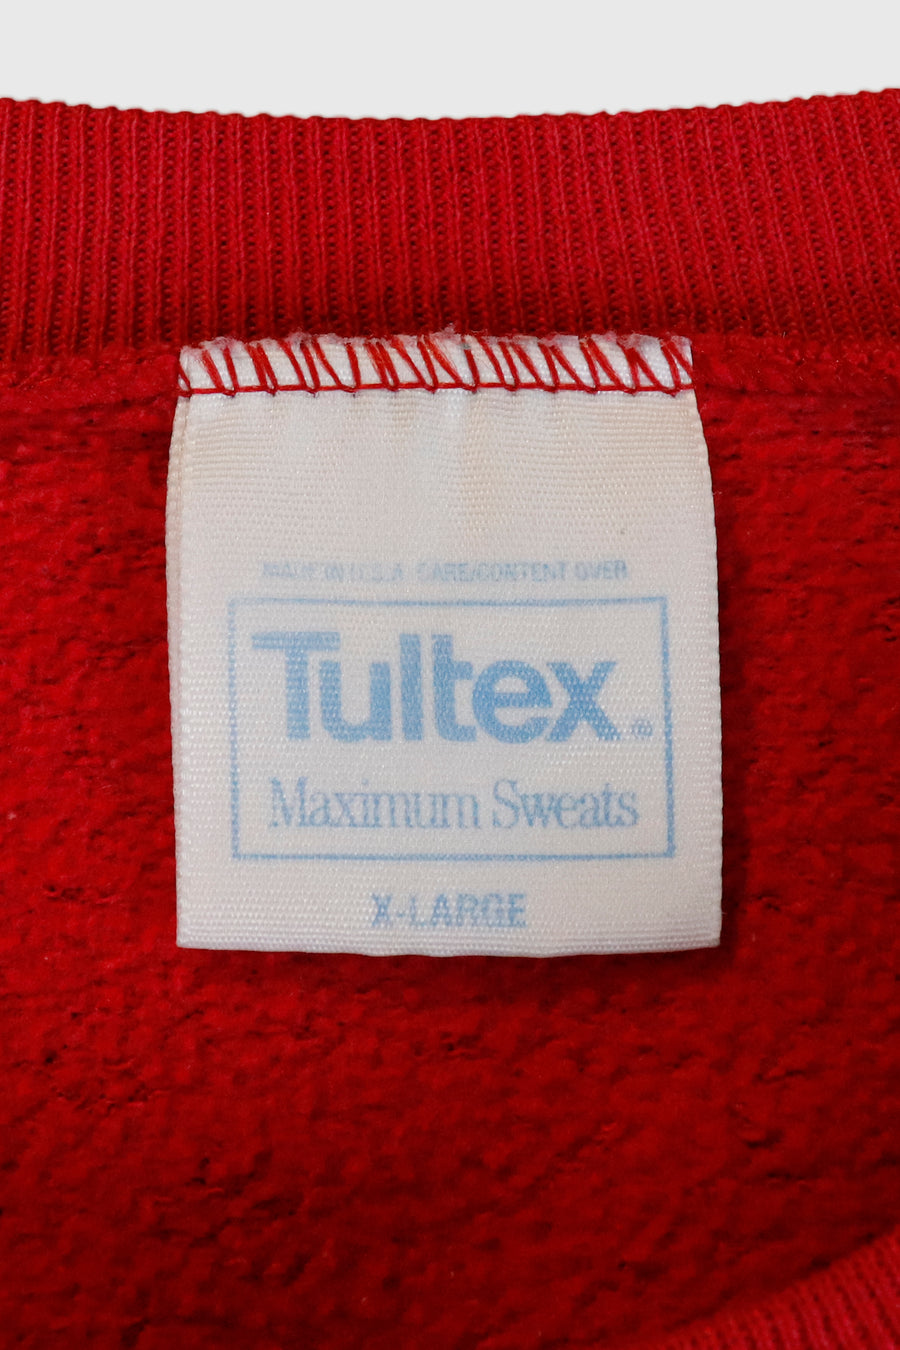 Vintage University Norway 'SIC SEMPER LVEFISK' Sweatshirt Sz XL